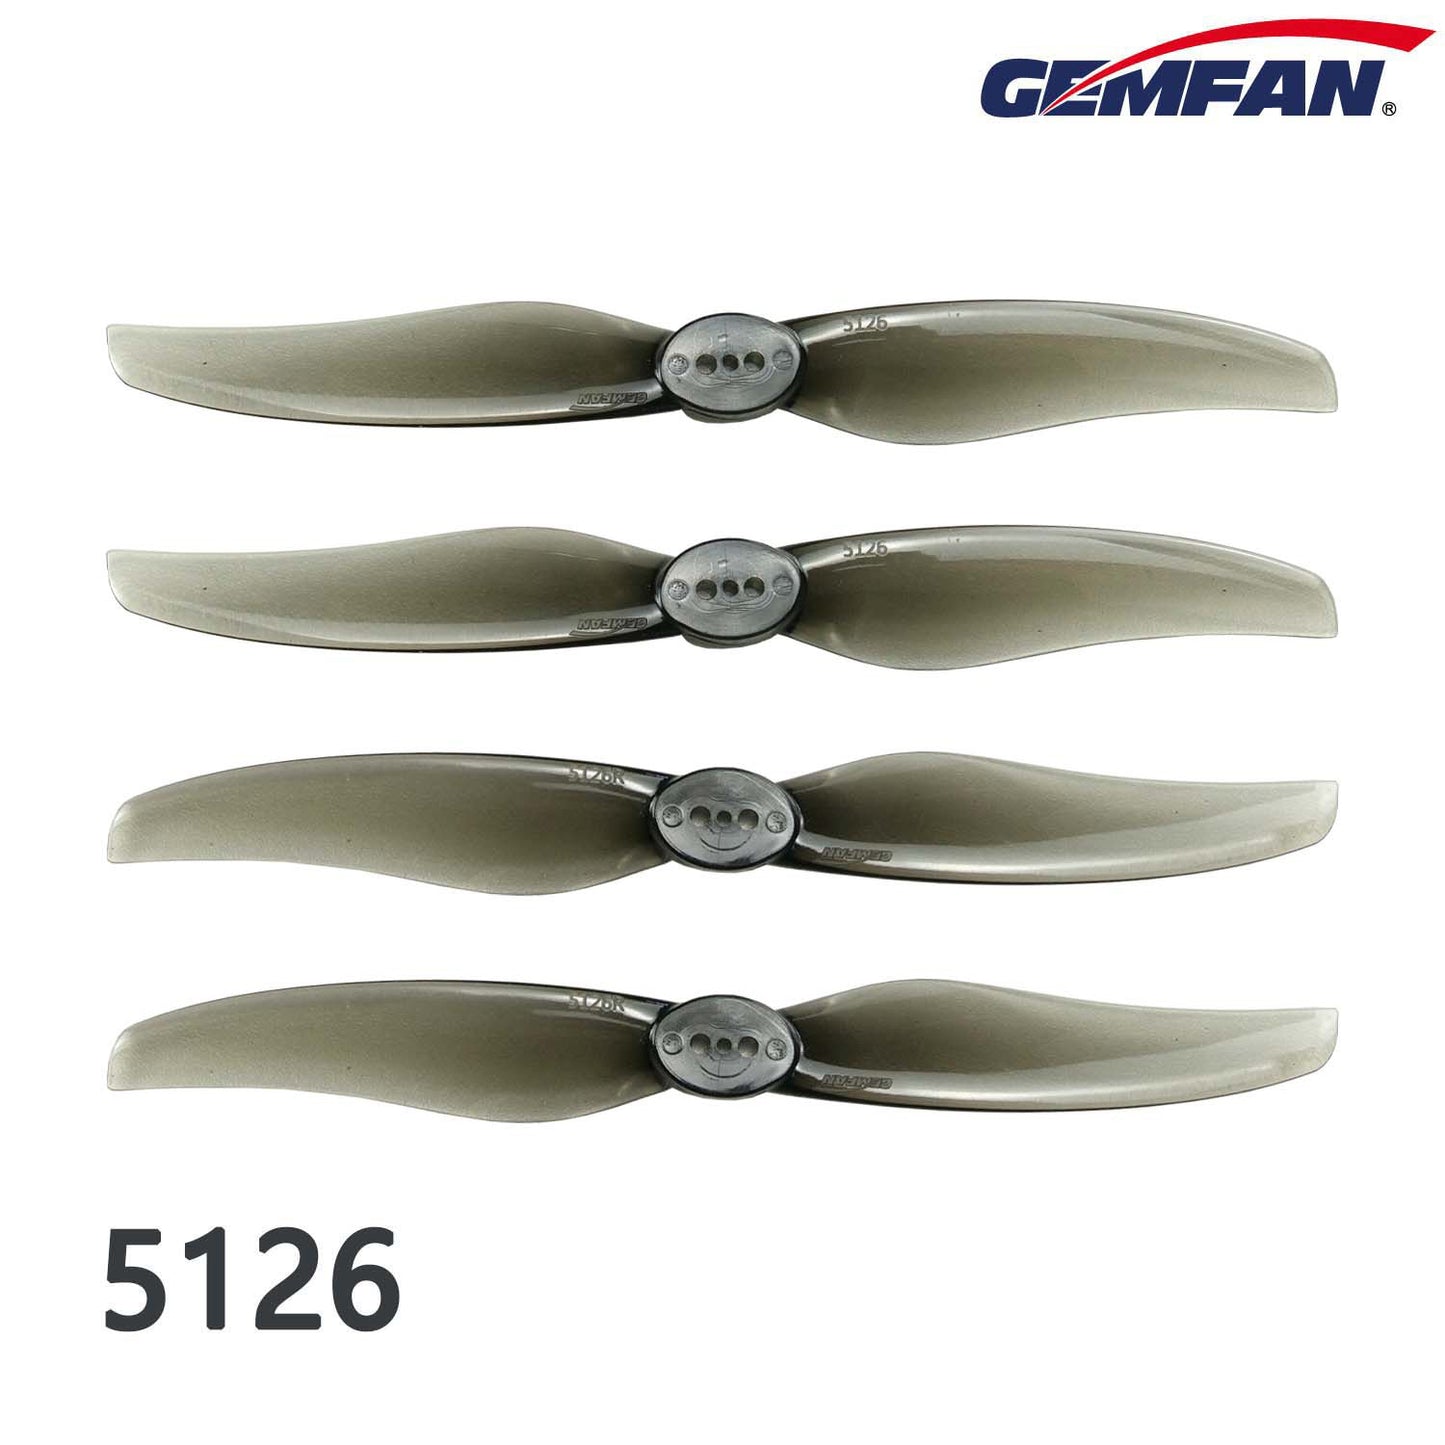 GEMFAN Propeller 5126 2 pairs/4pcs (2CW & 2CCW) for T1 VTOL